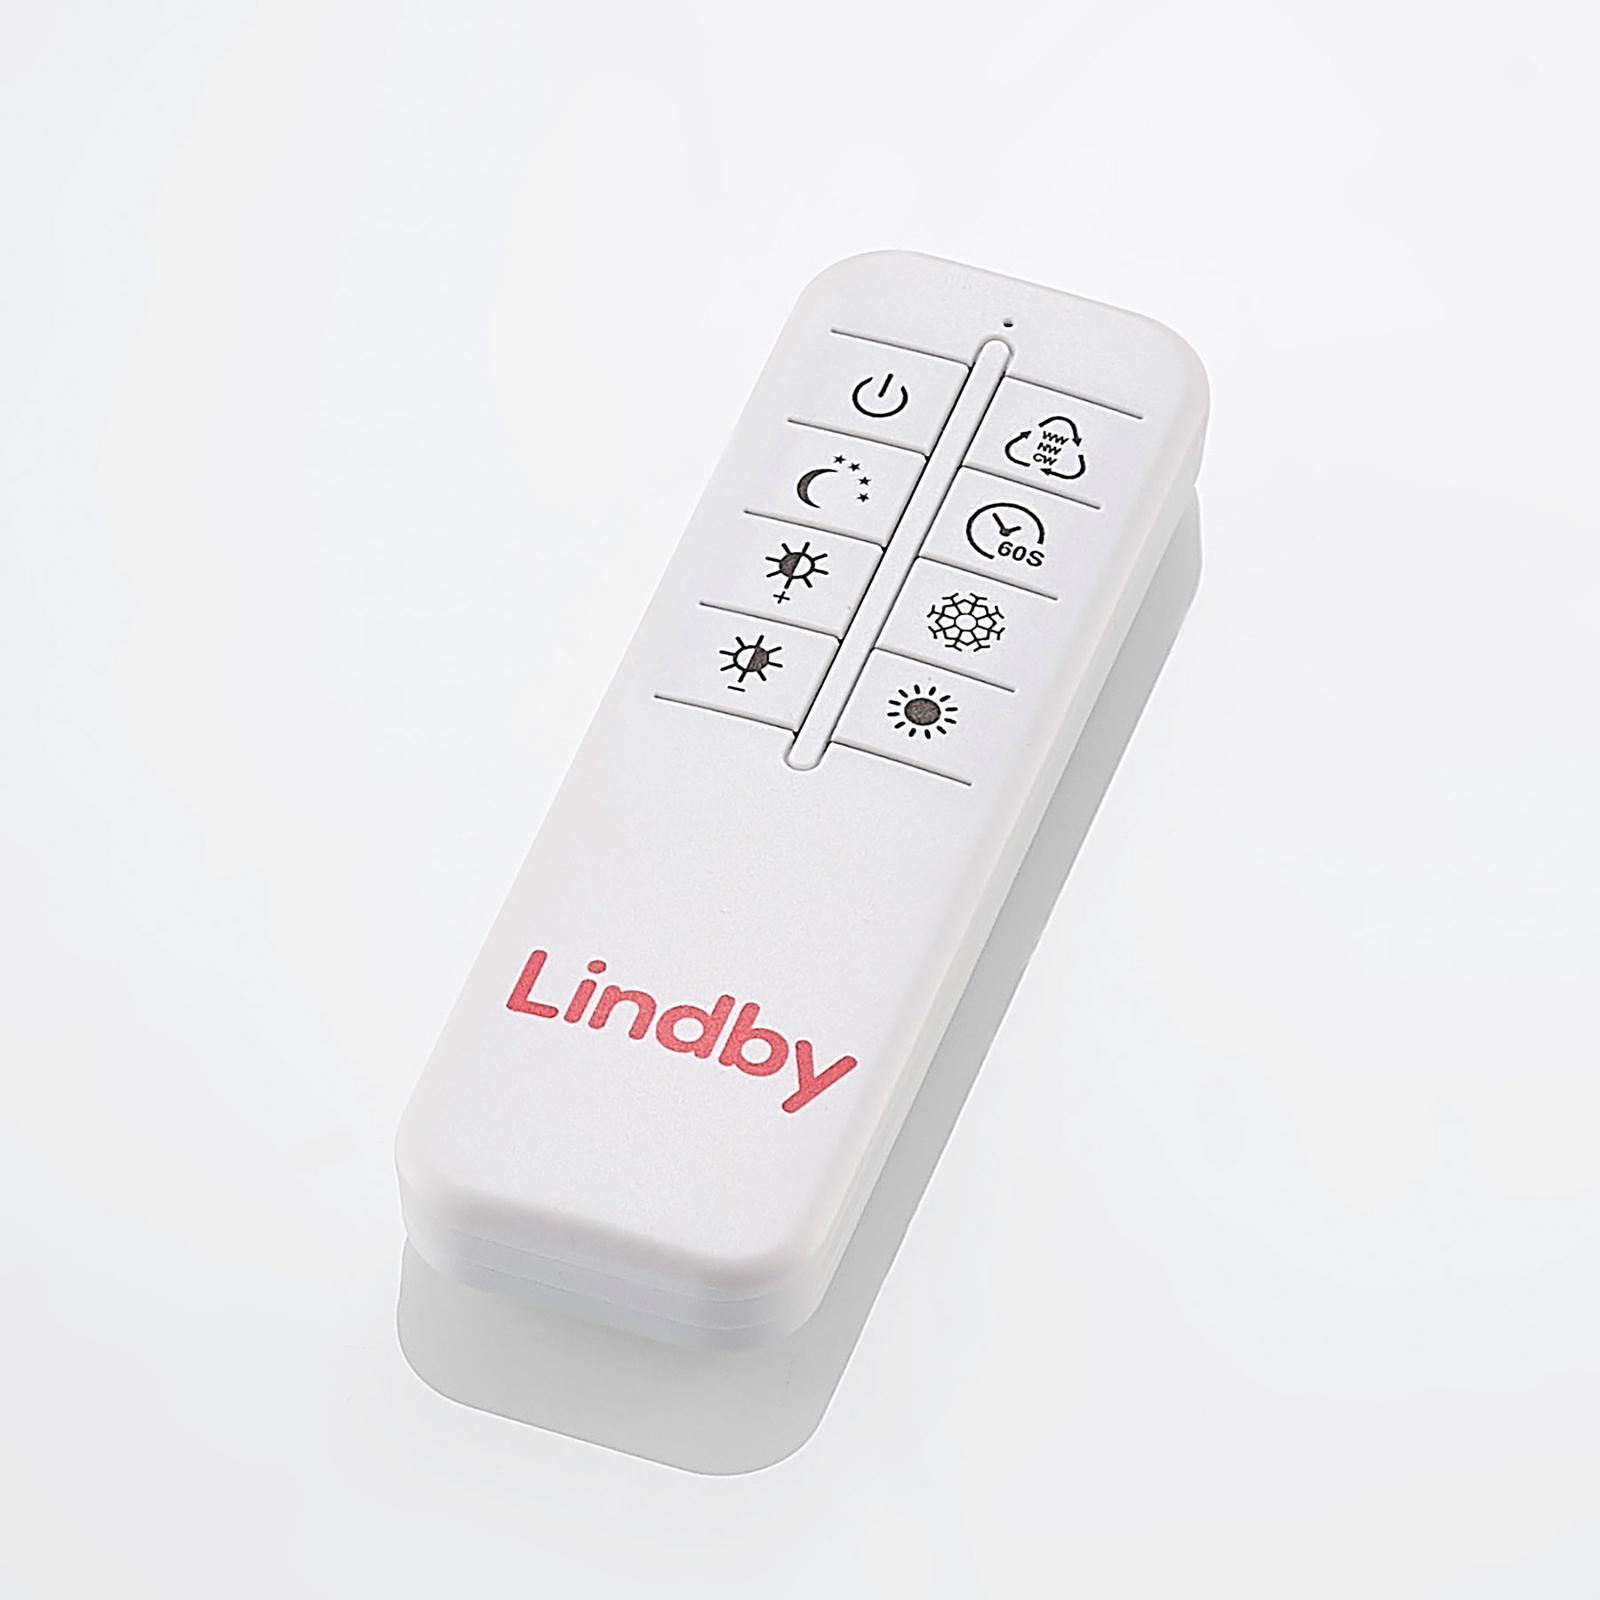 Lindby Zayd LED-Deckenleuchte, nickel, dimmbar